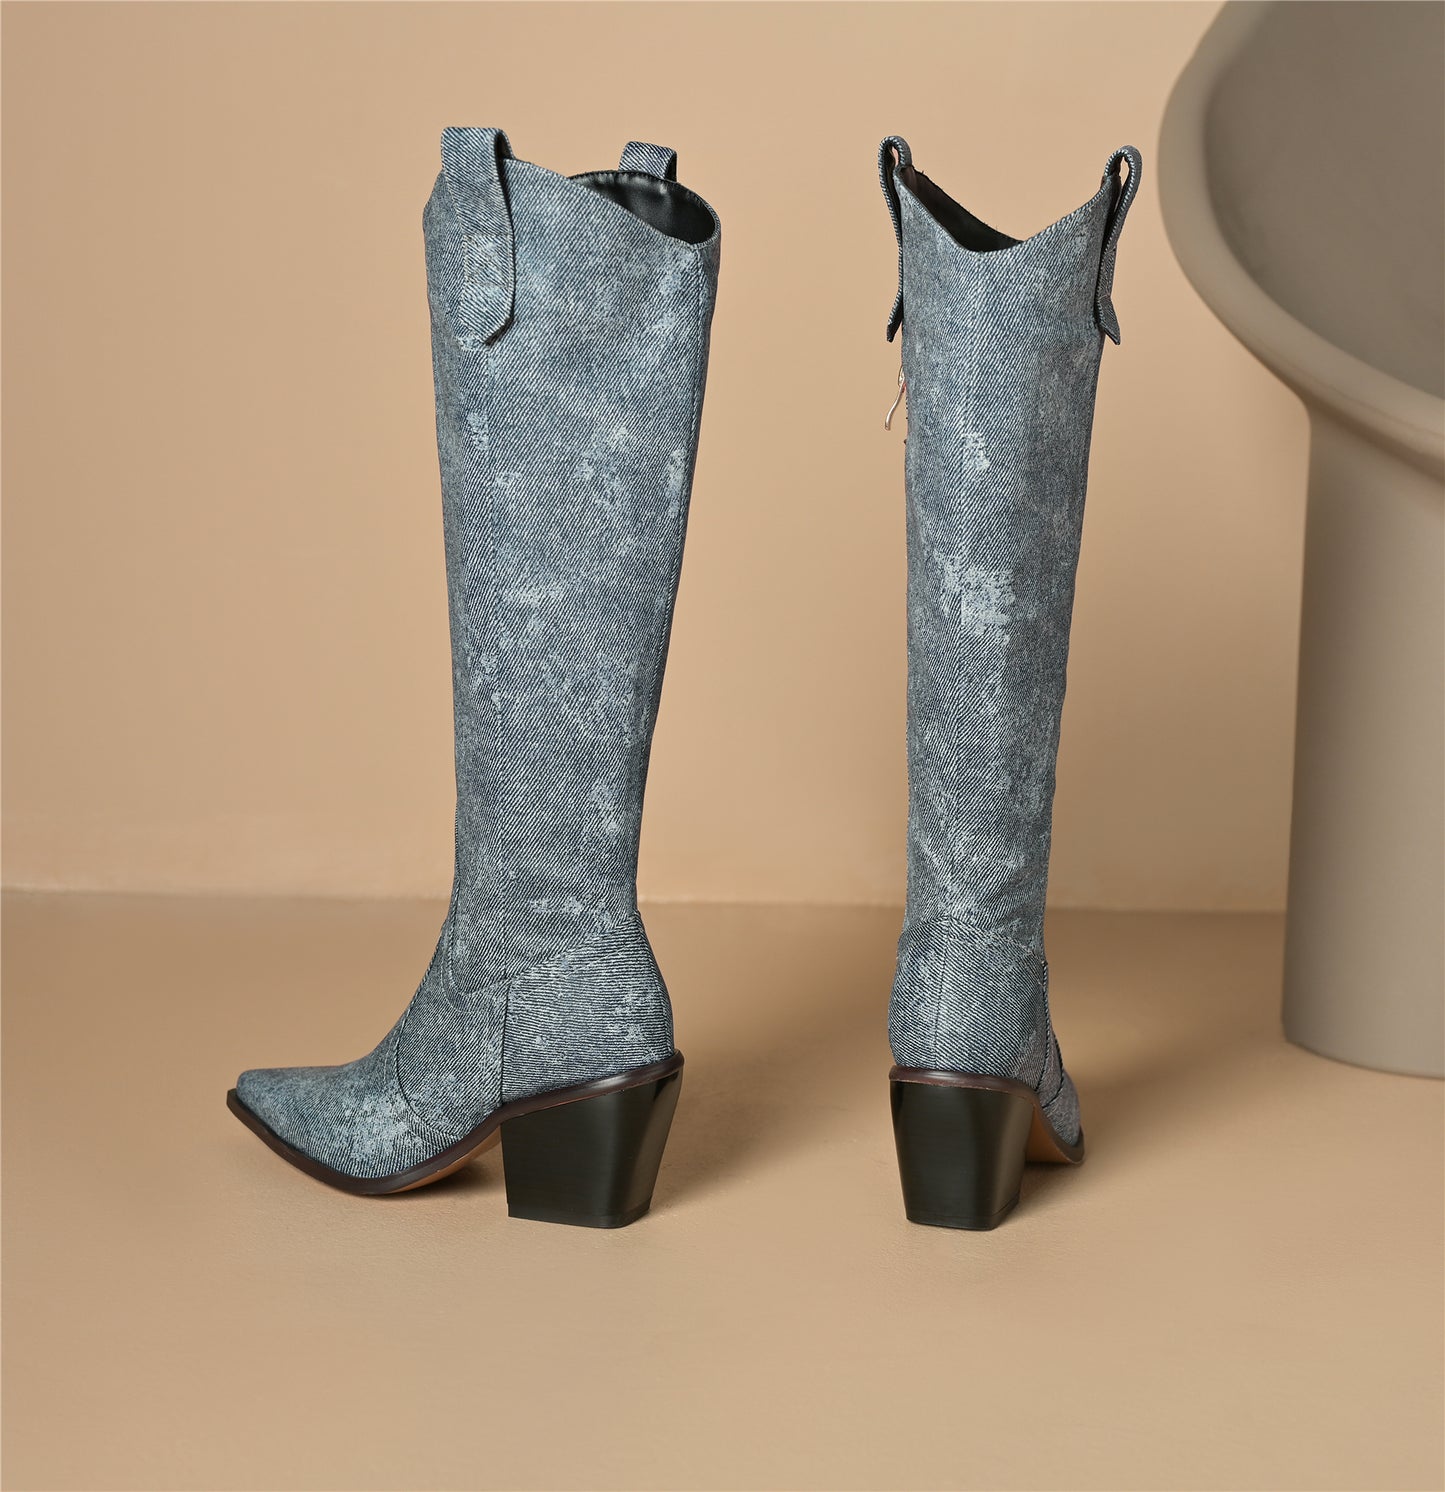 TinaCus Women's Pointed Toe Genuine Leather Jean Faric Handmade Block Heel Knee High Boots